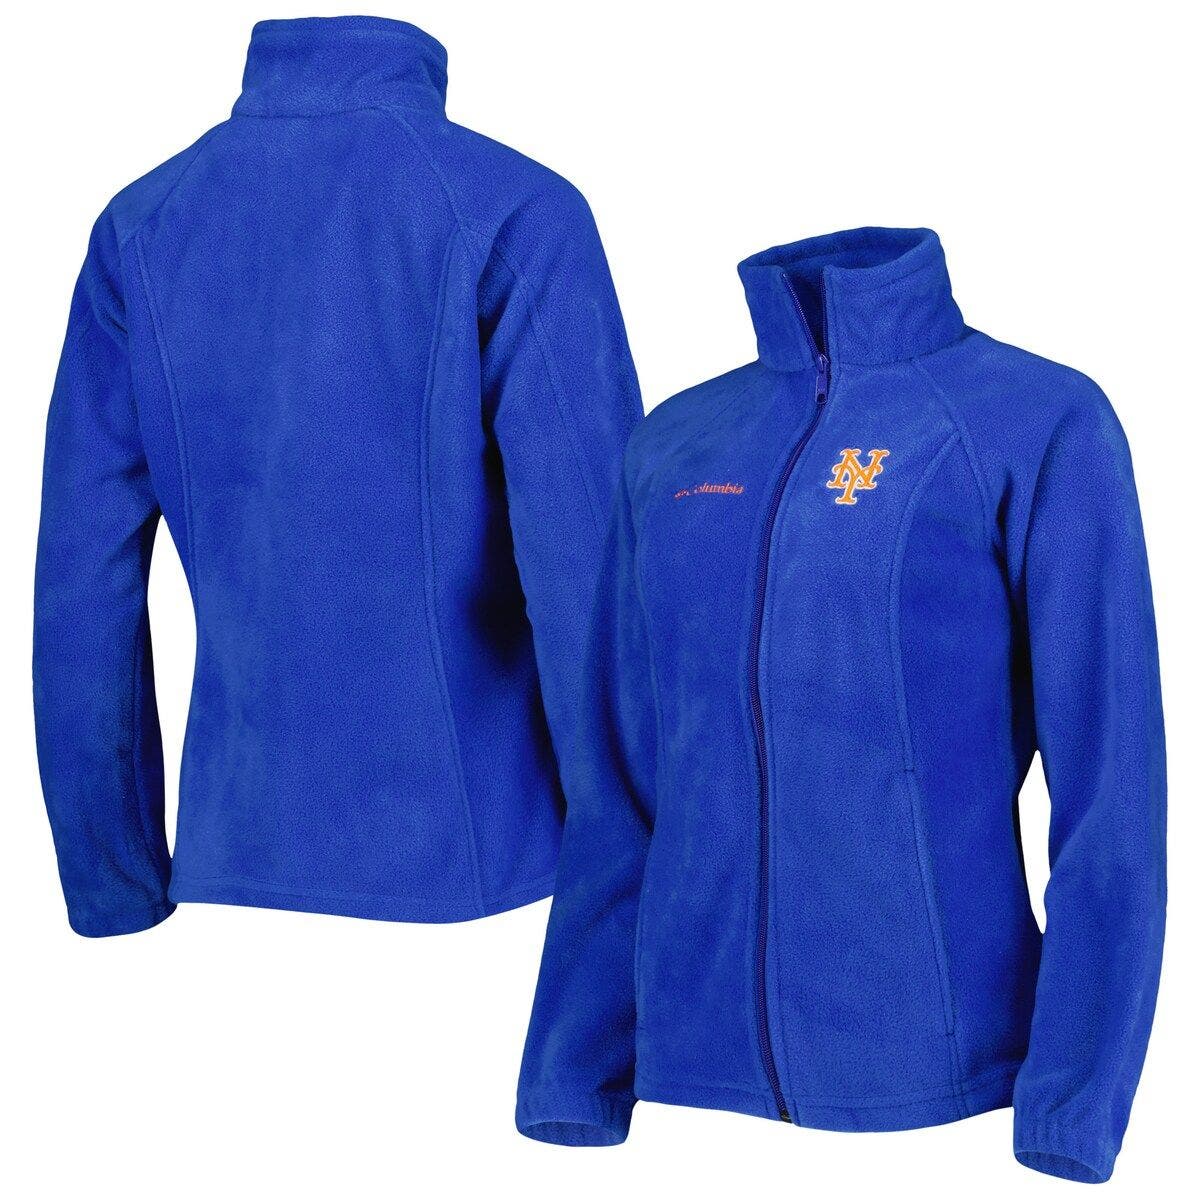 Womens Charcoal Ohio State Buckeyes Give & Go II Fleece Full-Zip Jacket at Nordstrom Nordstrom Women Clothing Jackets Fleece Jackets 